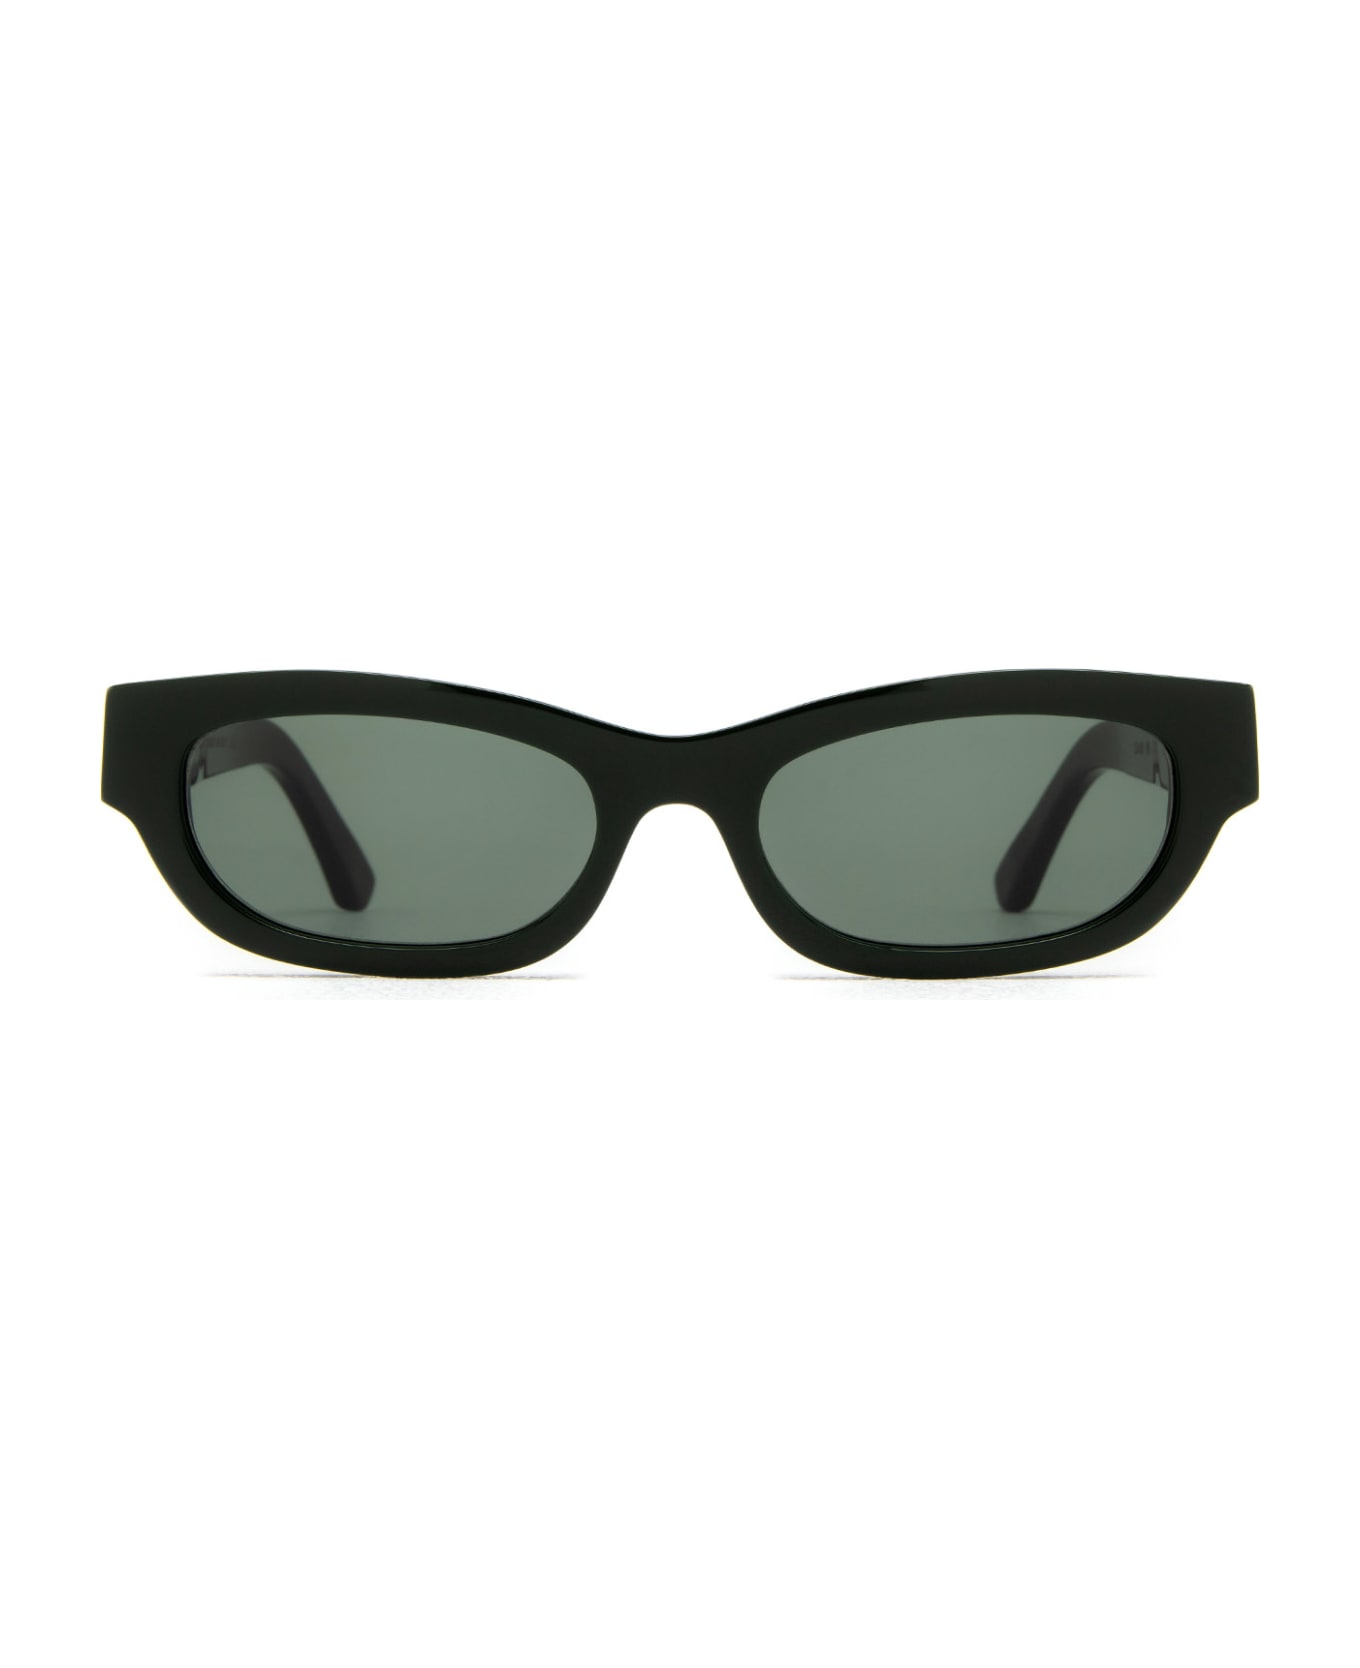 Huma Tojo Green Sunglasses - Green サングラス